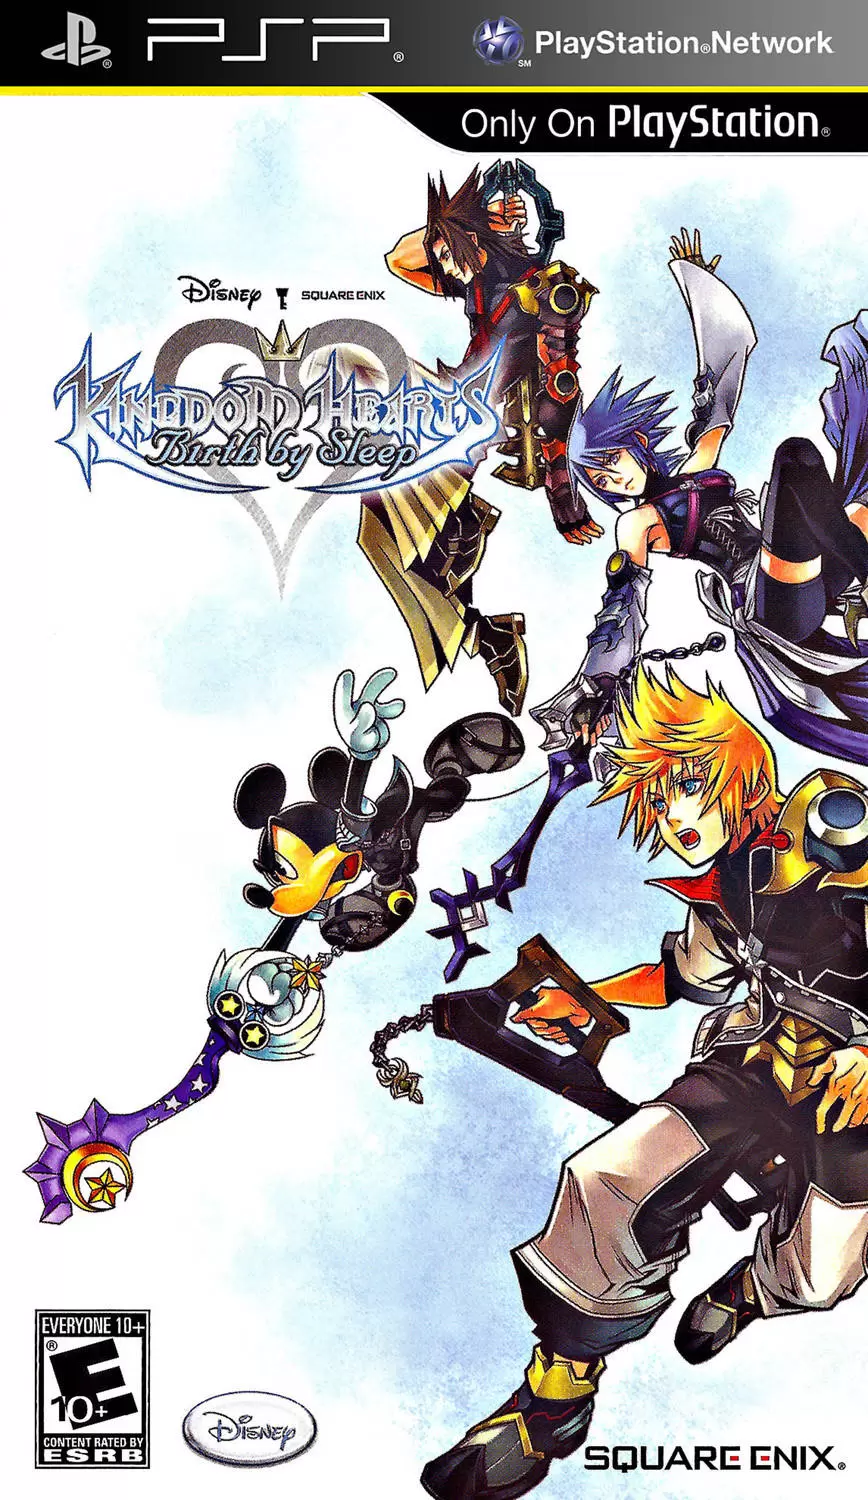 PSP Games - Kingdom Hearts: Birth by Sleep